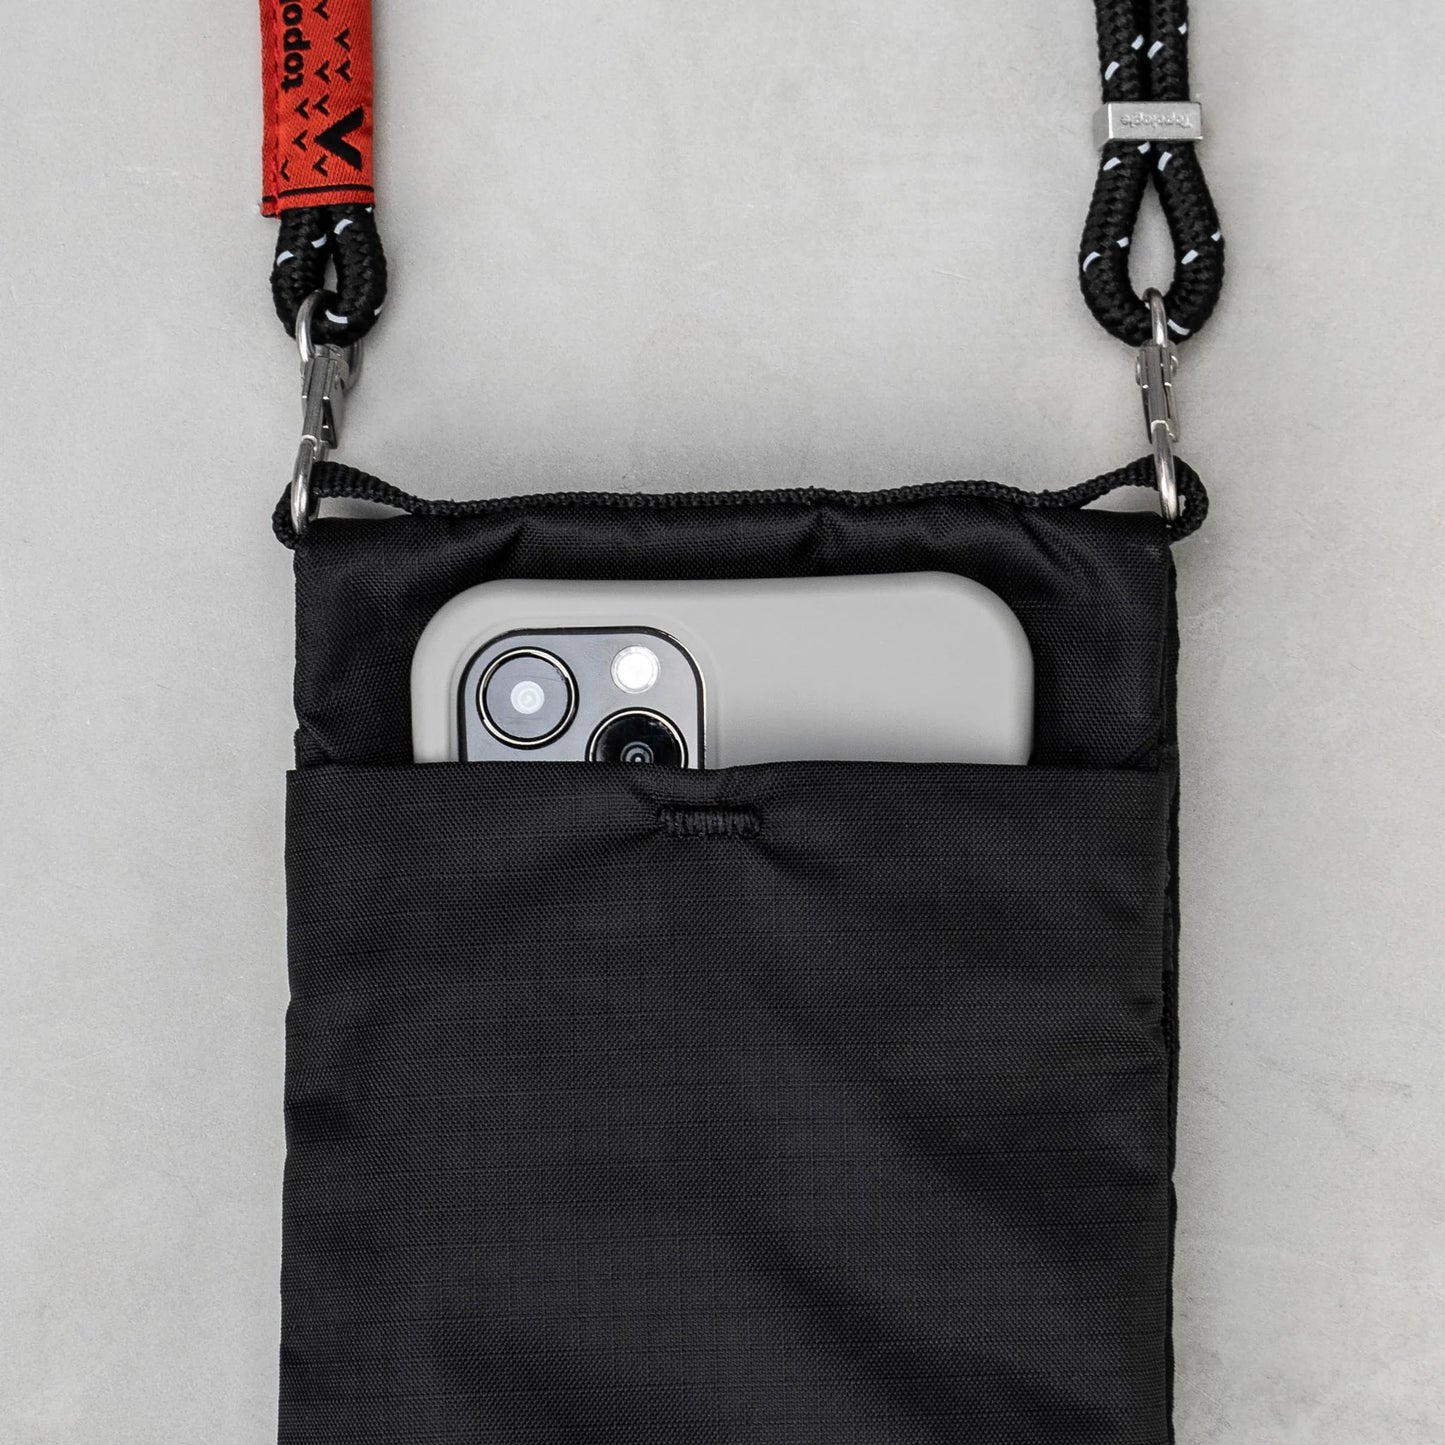 
                  
                    Black Light Phone Sacoche Bag With Peach Melange Rope Strap
                  
                